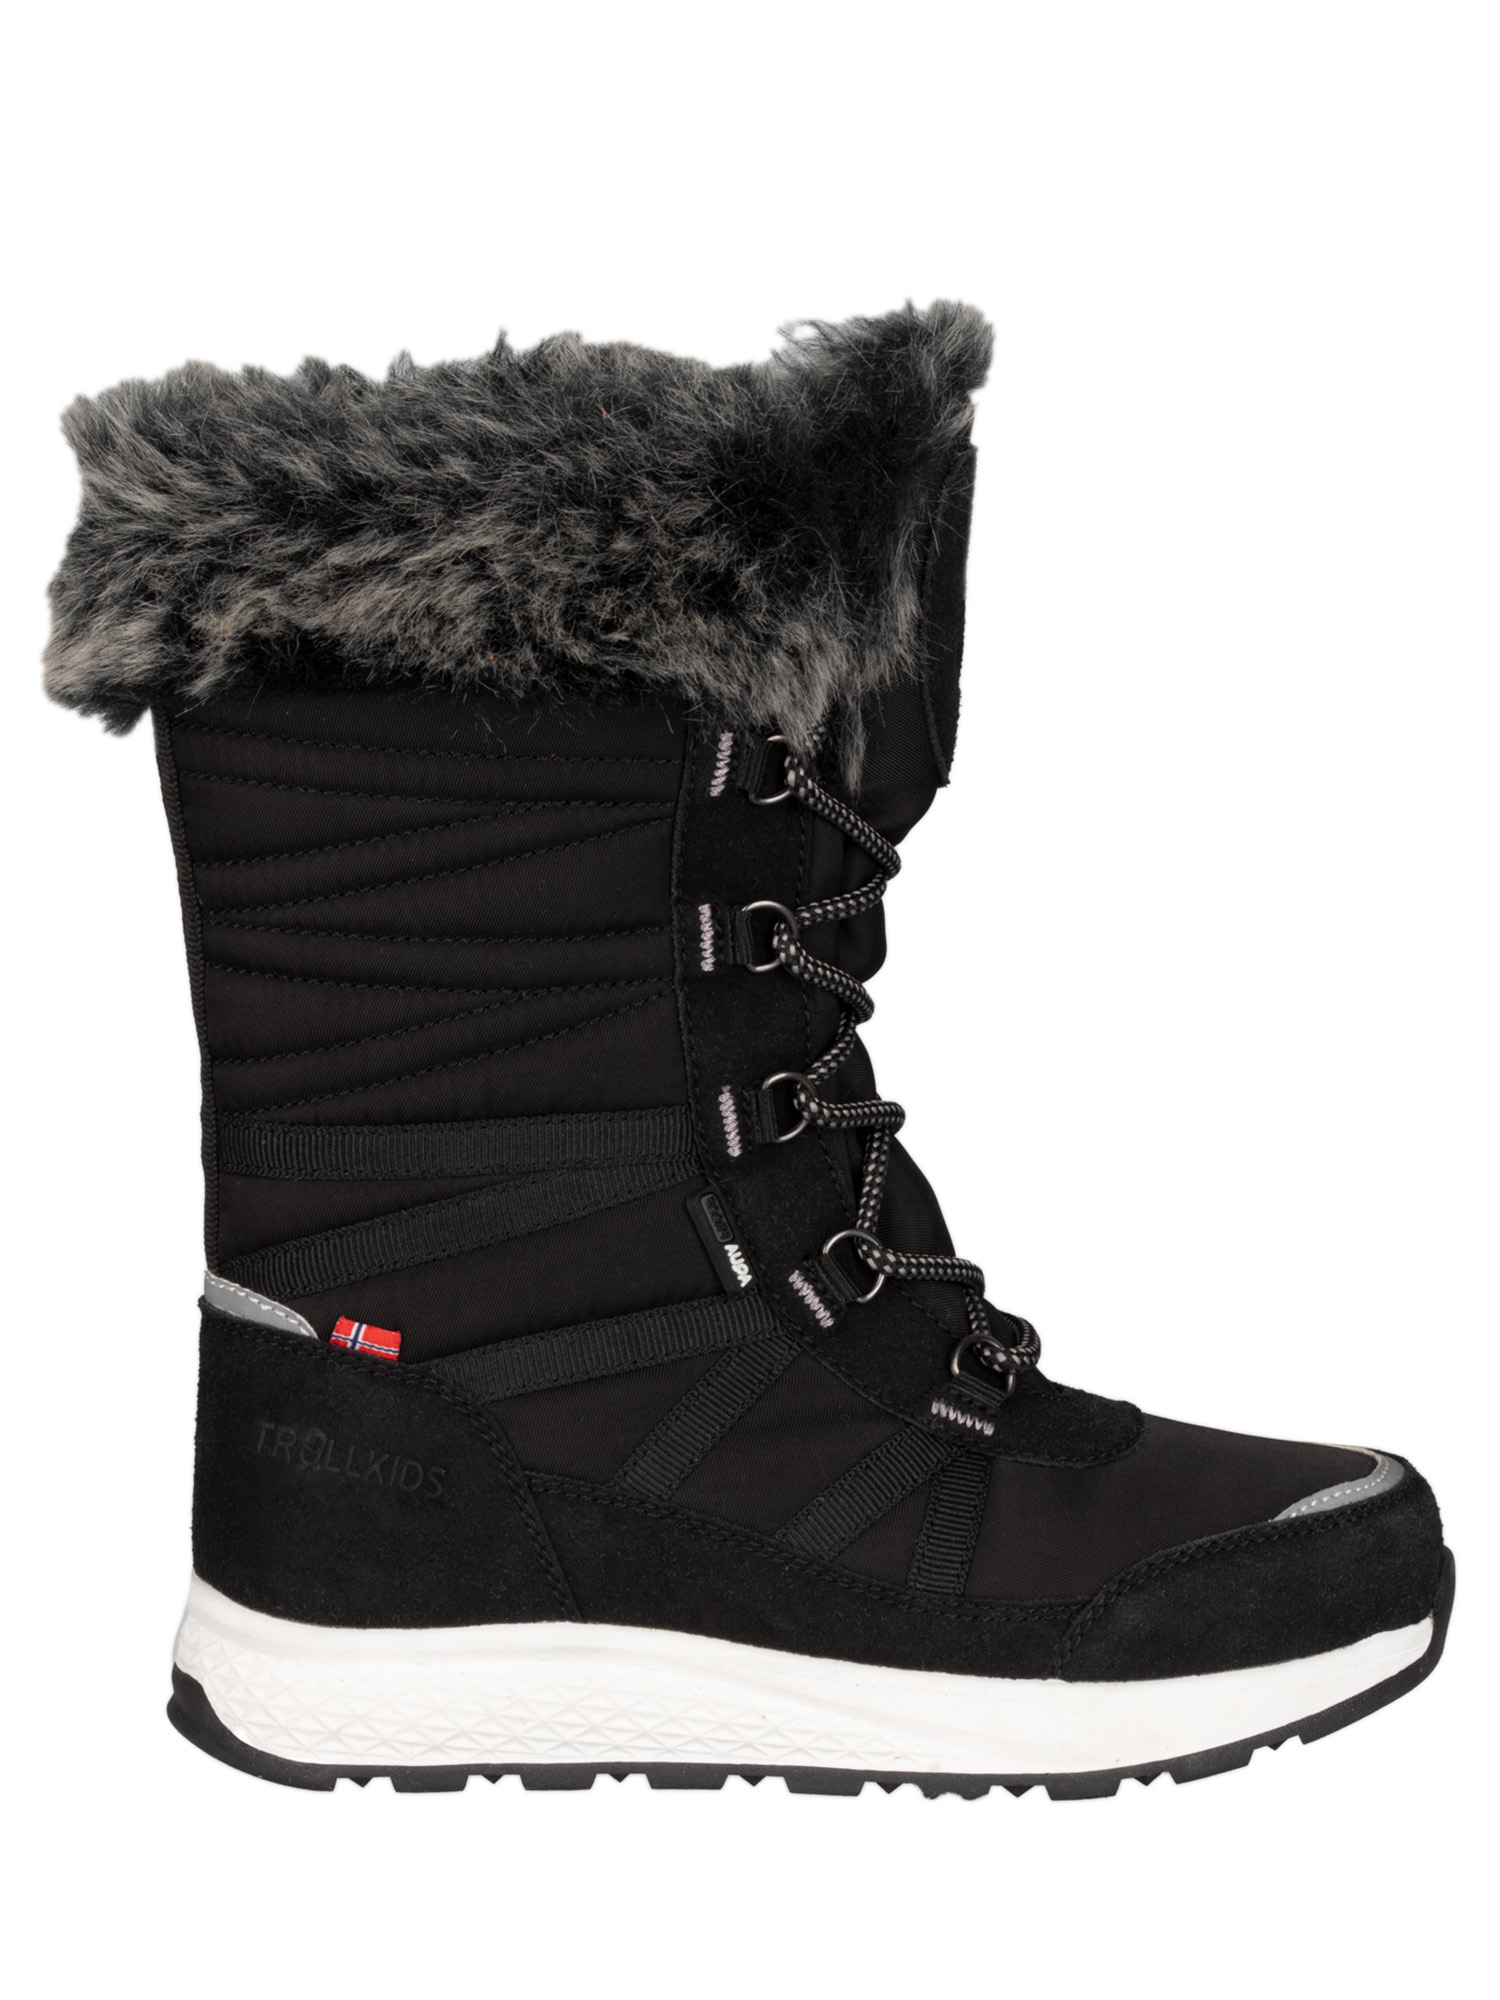 Ботинки Trollkids Girls Hemsedal Winter Boots Xt, черный, 33